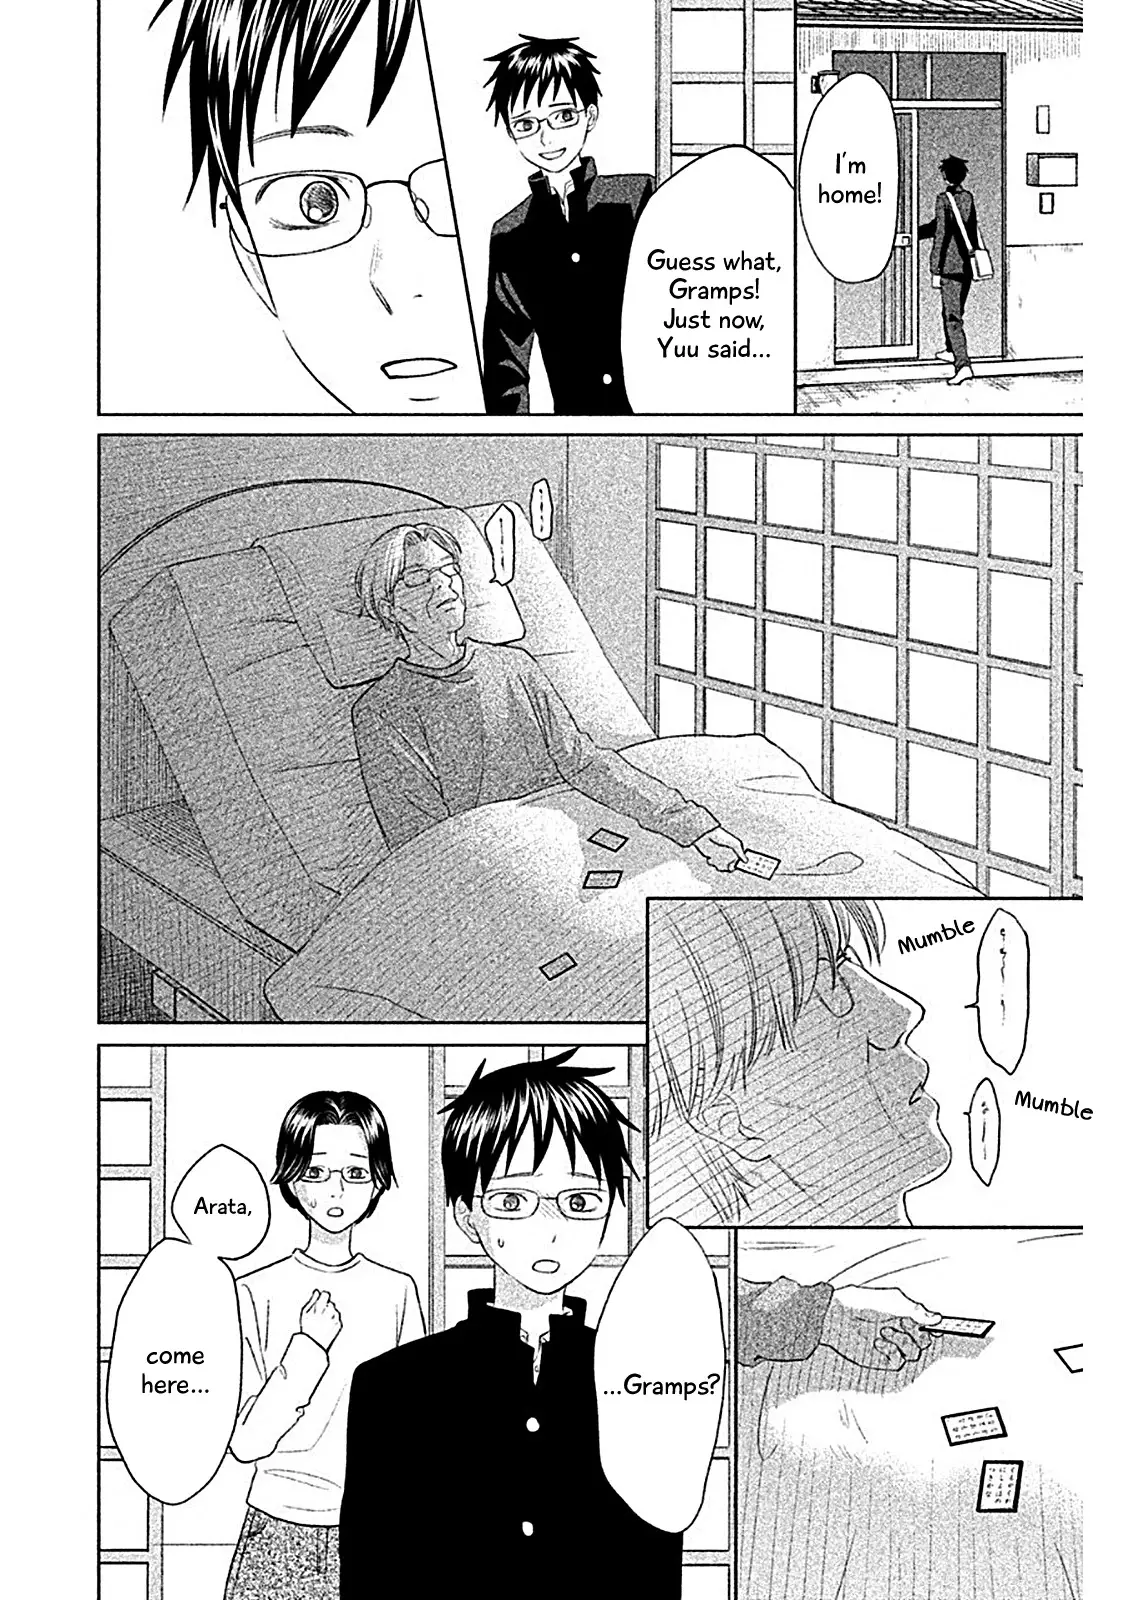 Chihayafuru: Middle School Arc - 7 page 16